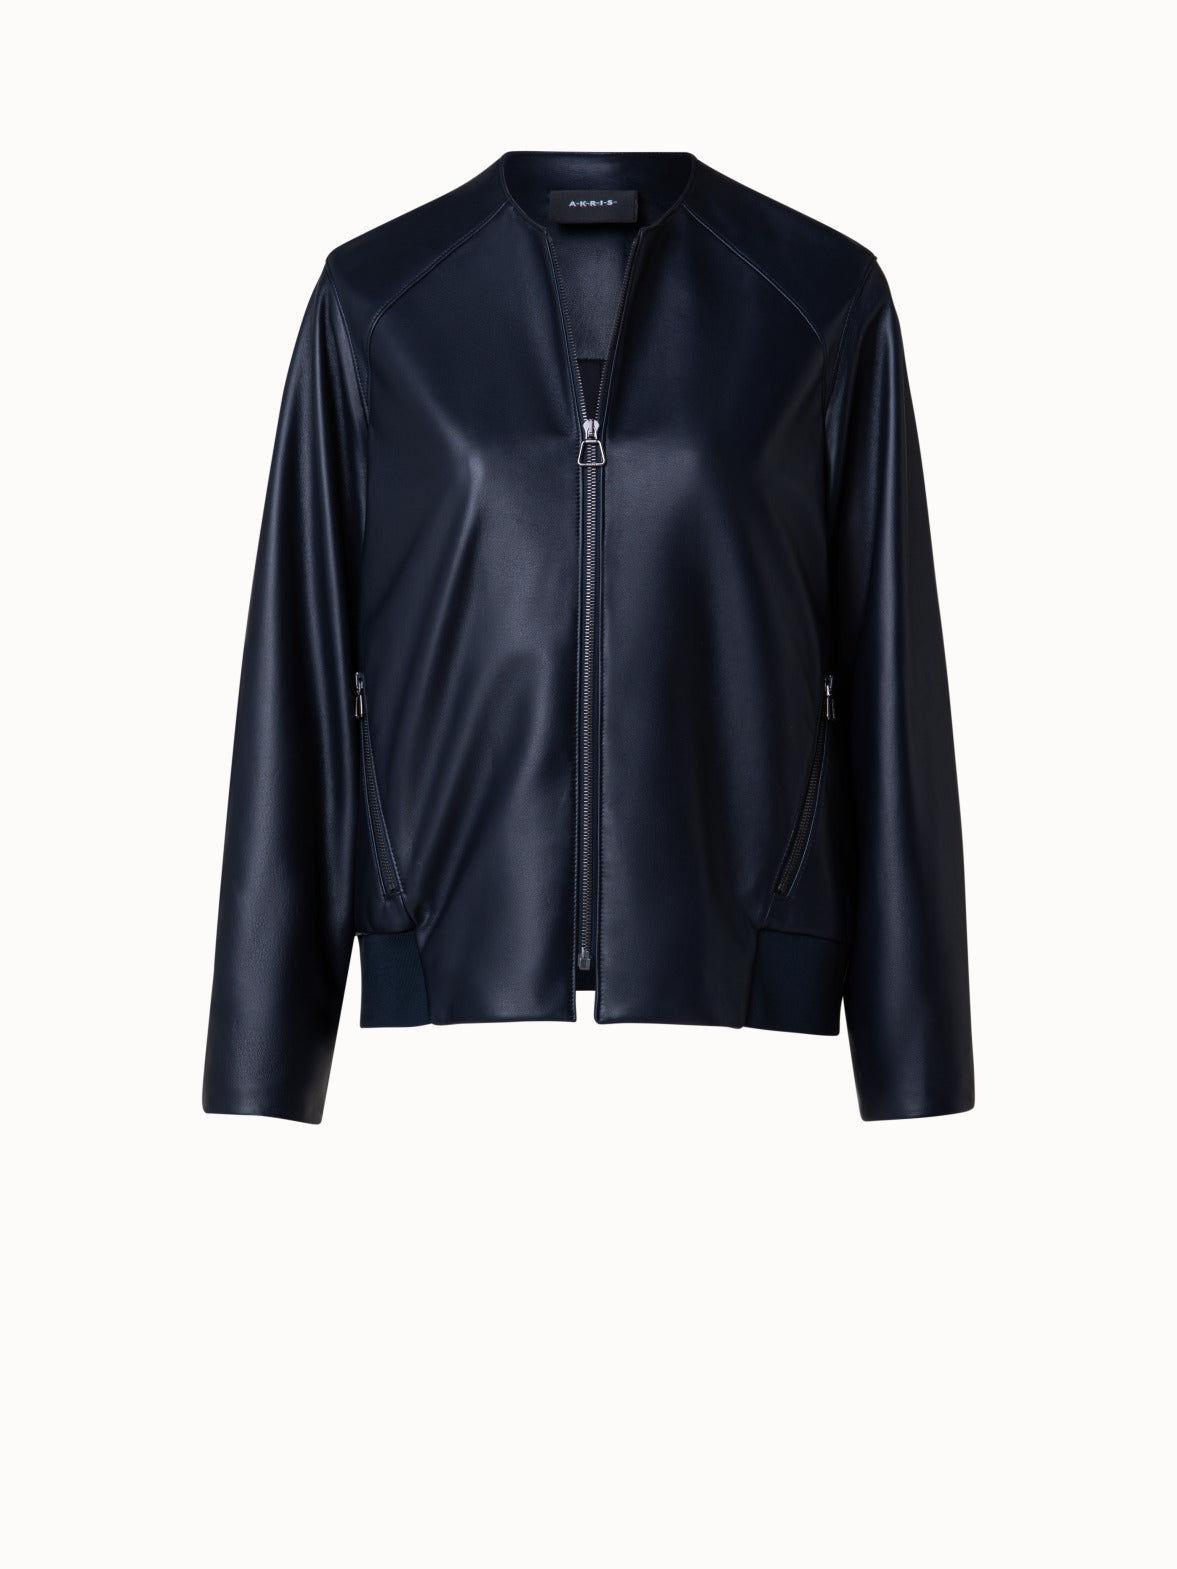 Buy Silversoft Women's Lambskin Leather Bomber Biker Jacket Medium Black at  Amazon.in